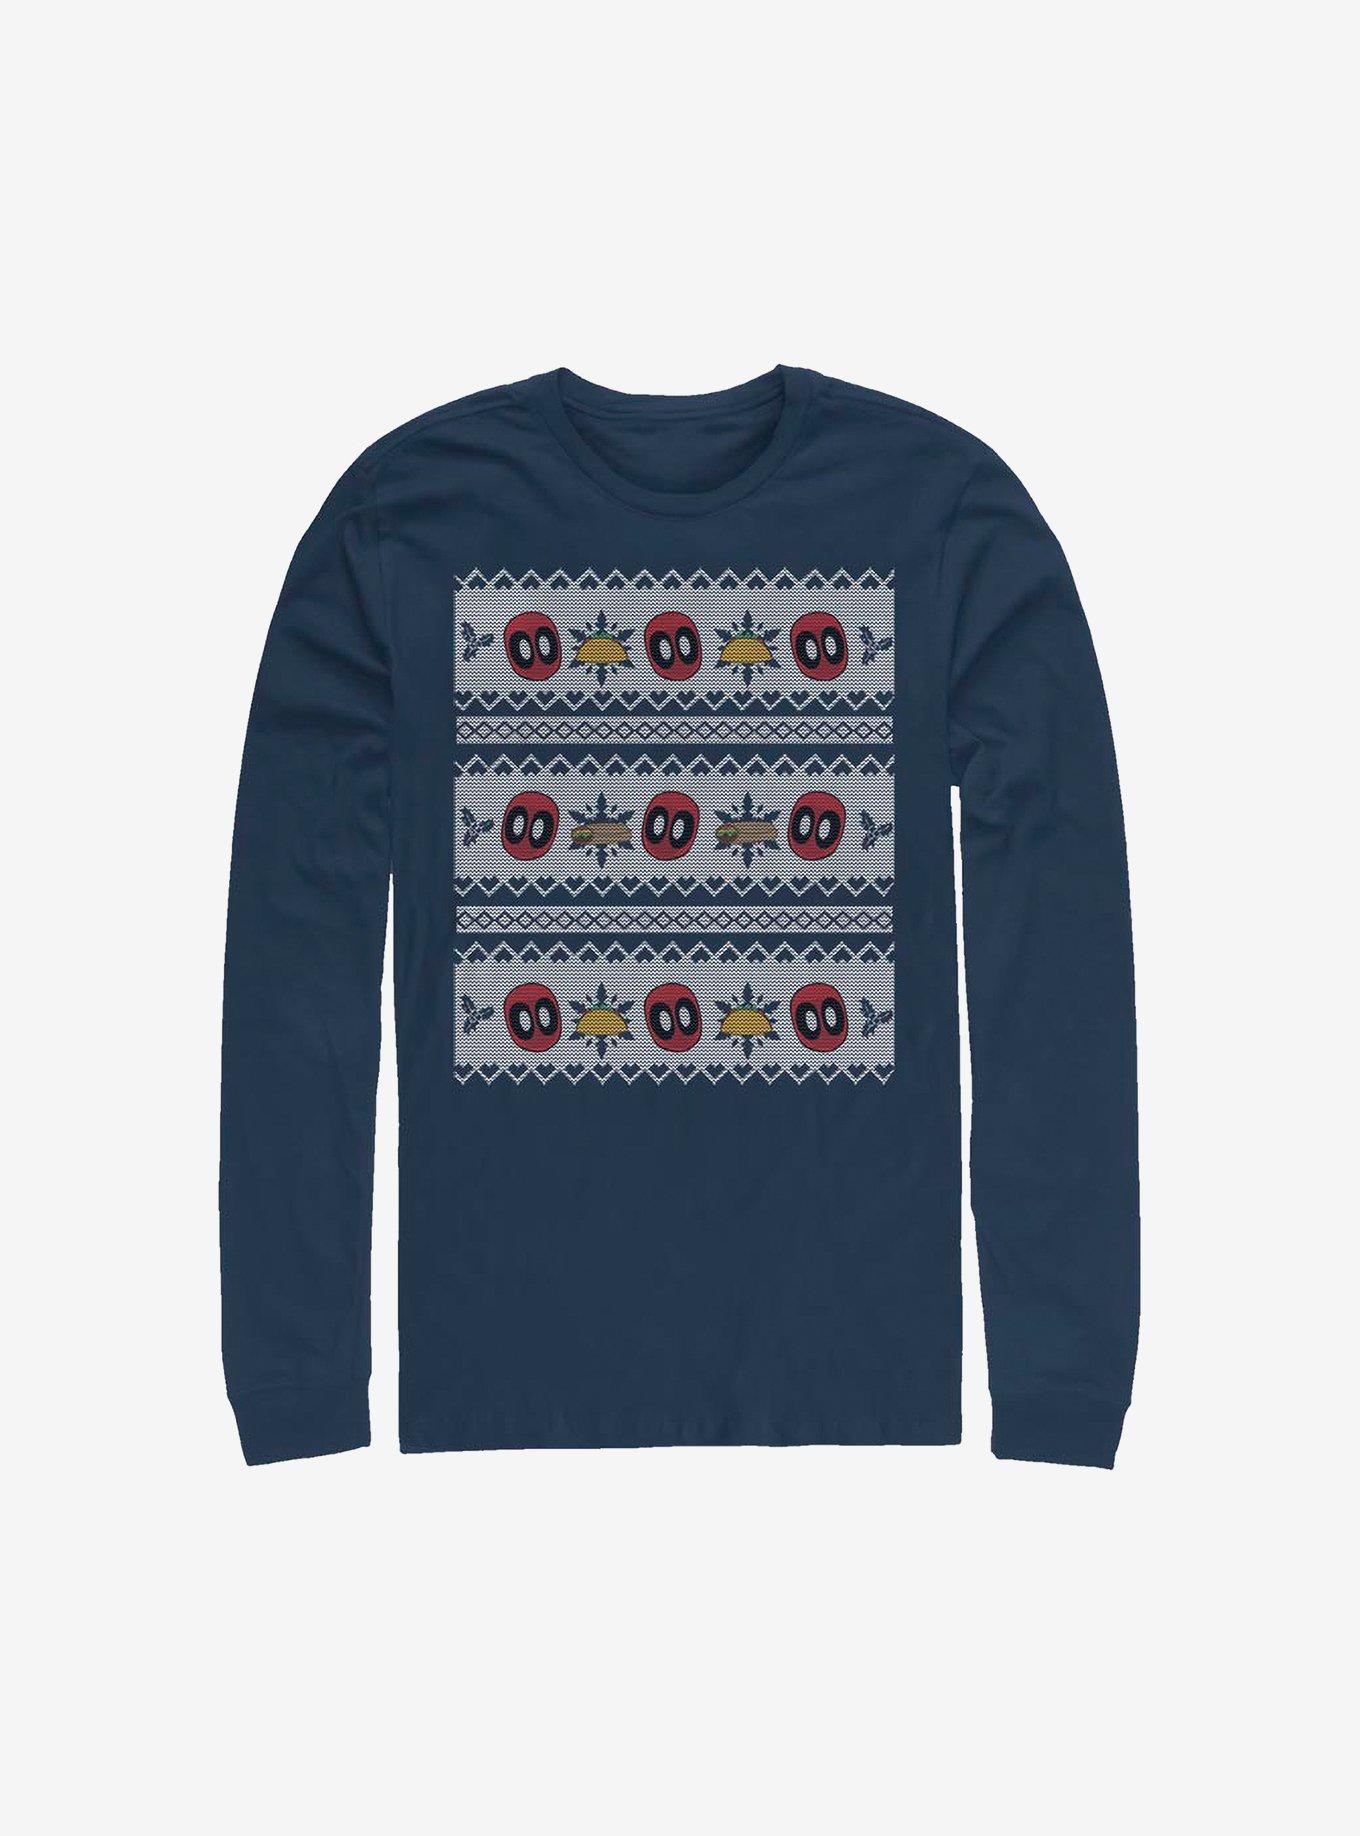 Marvel Deadpool Christmas Pattern Sweater Long-Sleeve T-Shirt, NAVY, hi-res